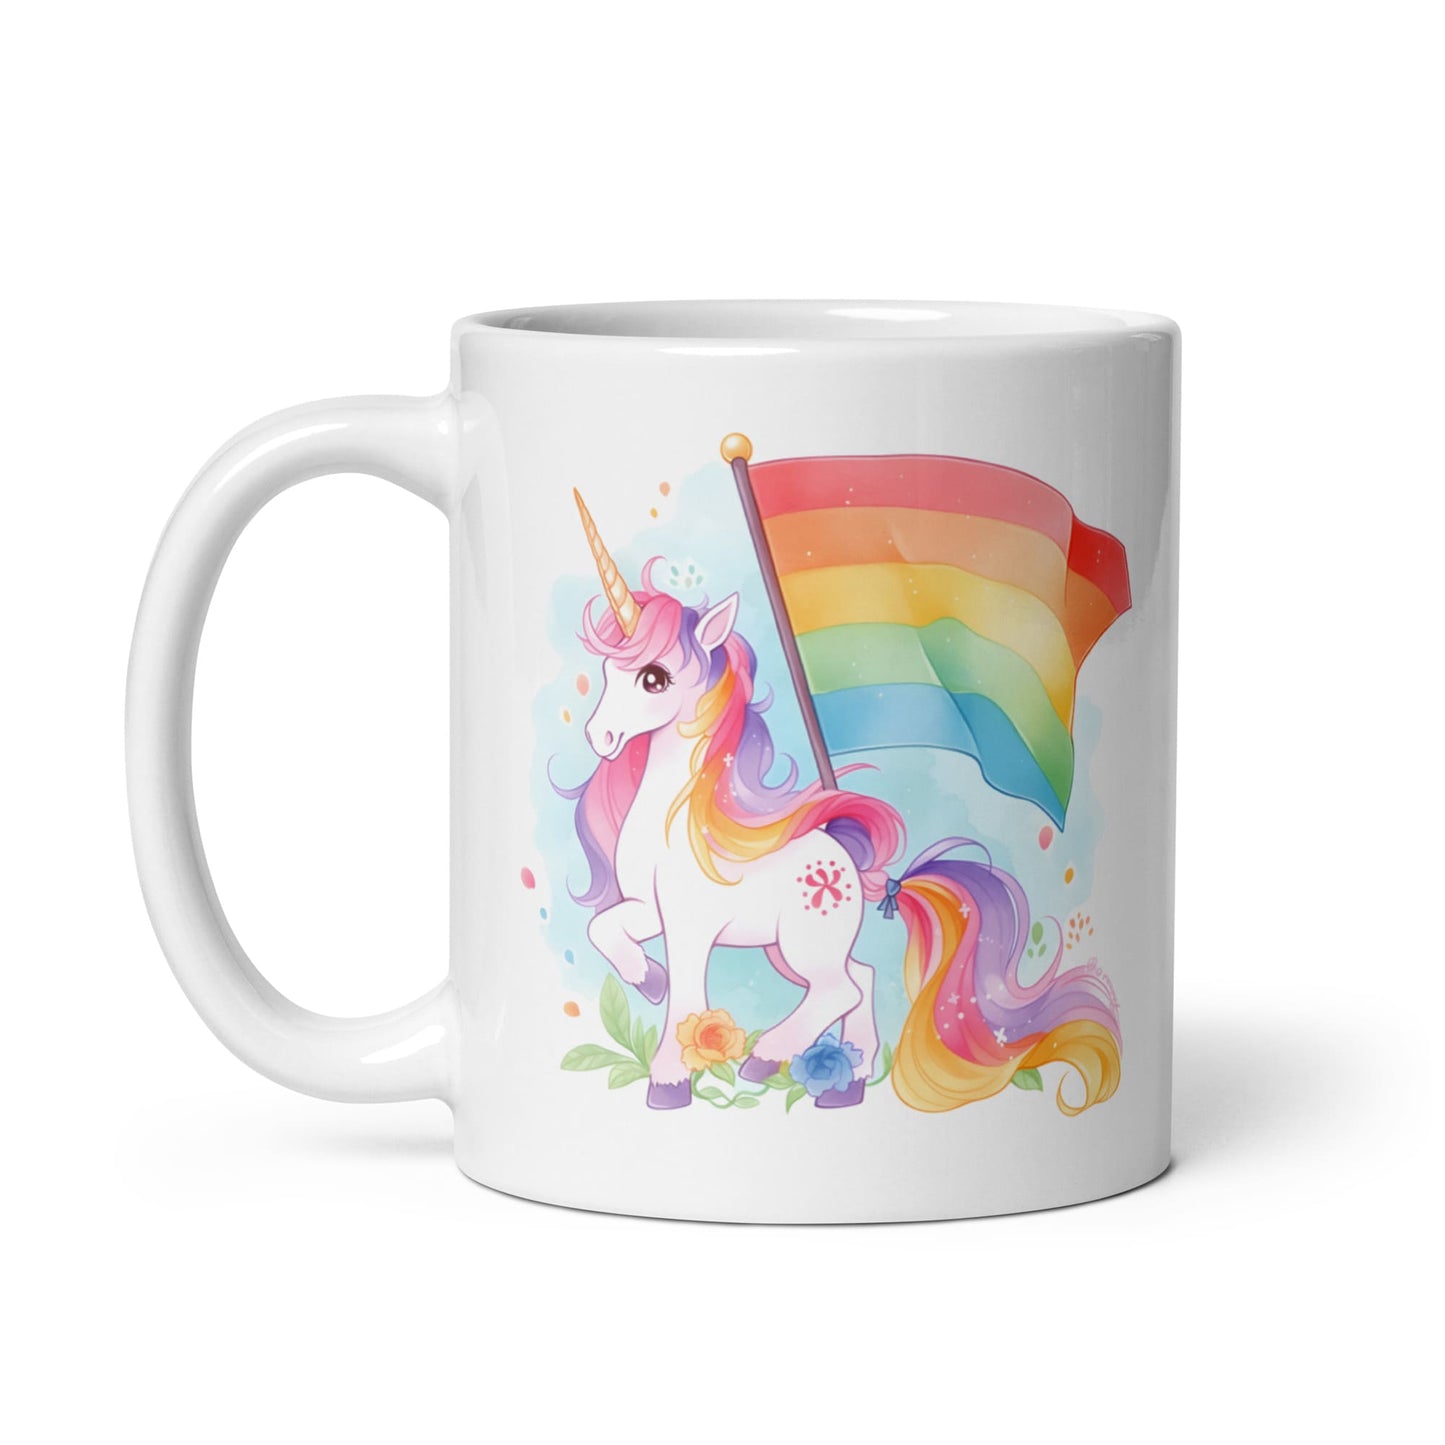 LGBTQ mug, cute rainbow unicorn coffee or tea cup left